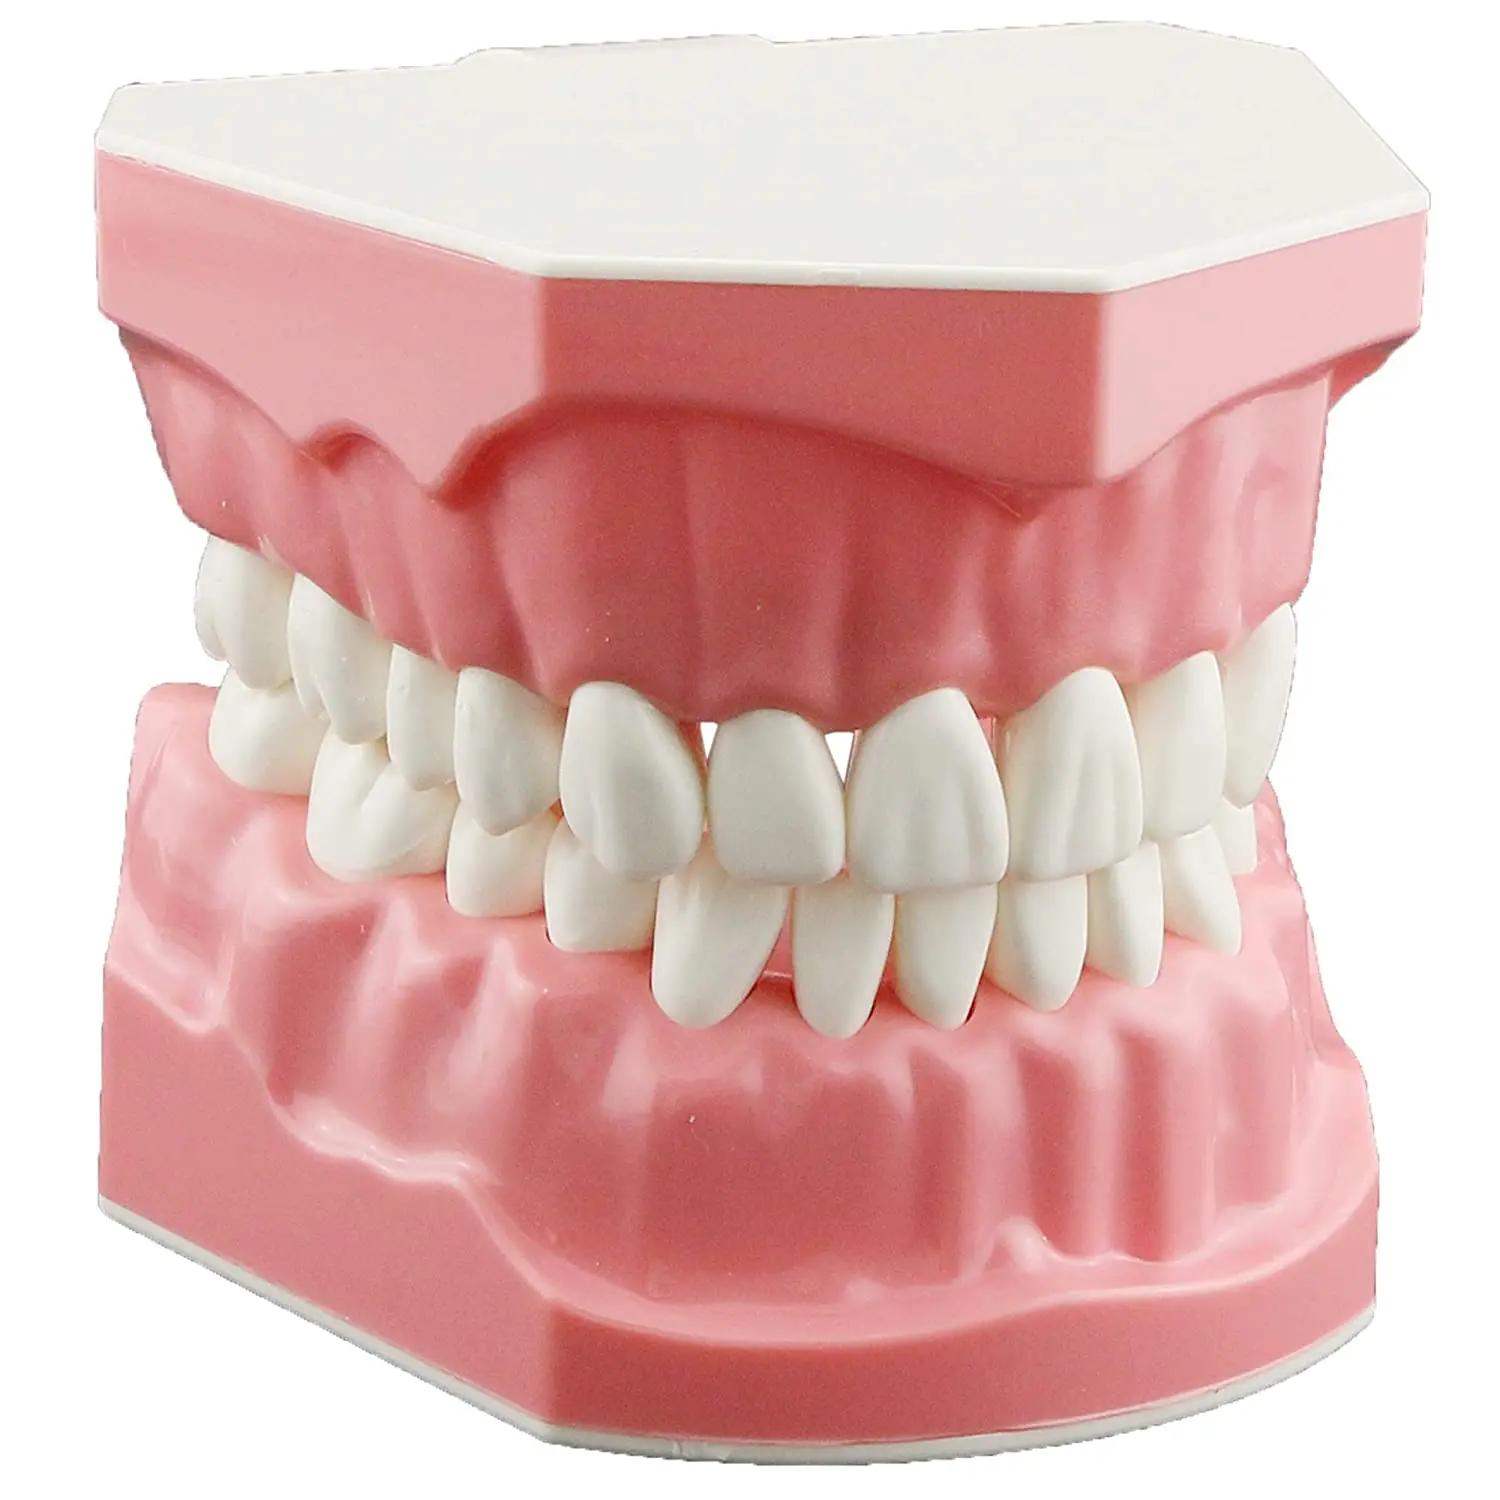 

Dental 1:1 Model Brushing Flossing Practice Teeth Typodont Model Gingiva Visible Anatomical Demonstration Teaching Study